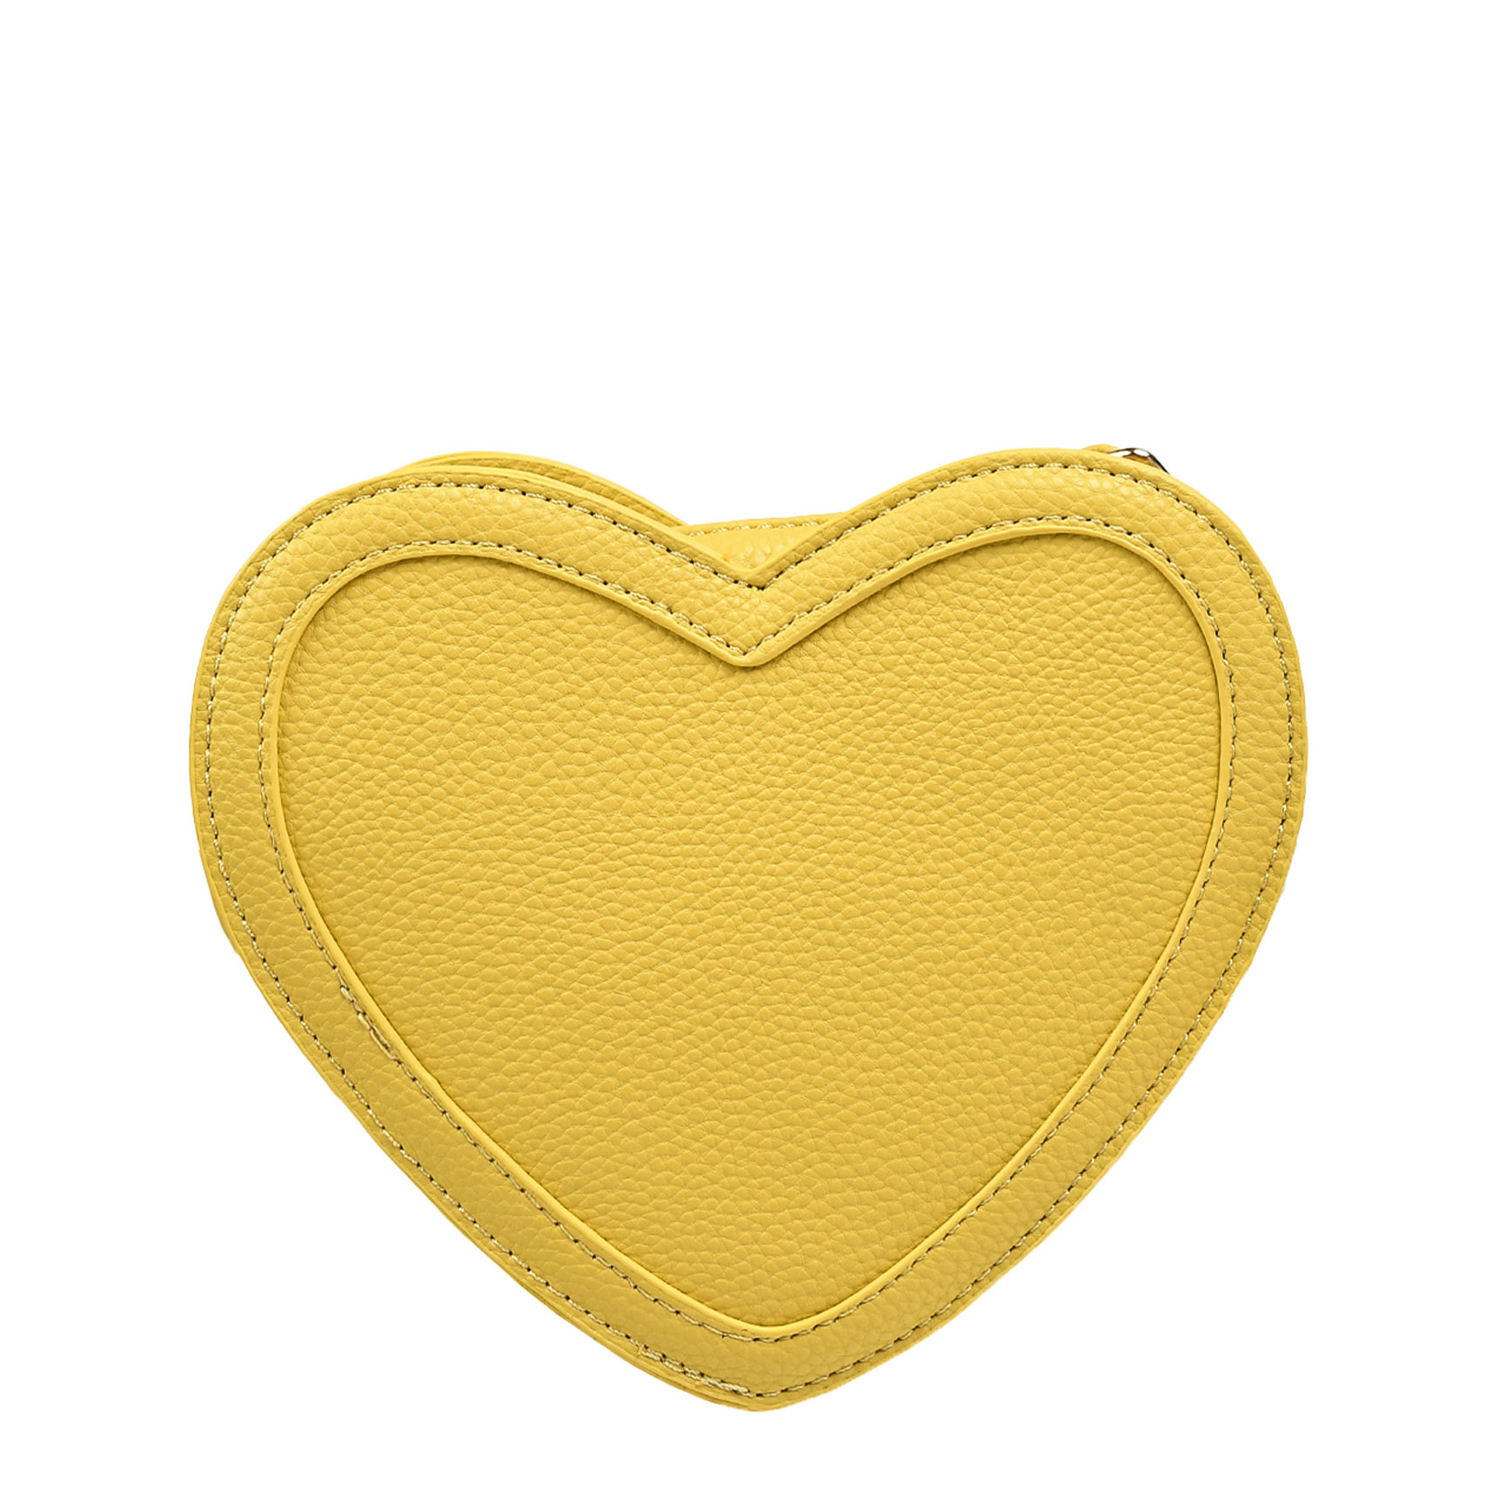 Сумка Heart Bag Pale Sun Molo, размер unica, цвет желтый